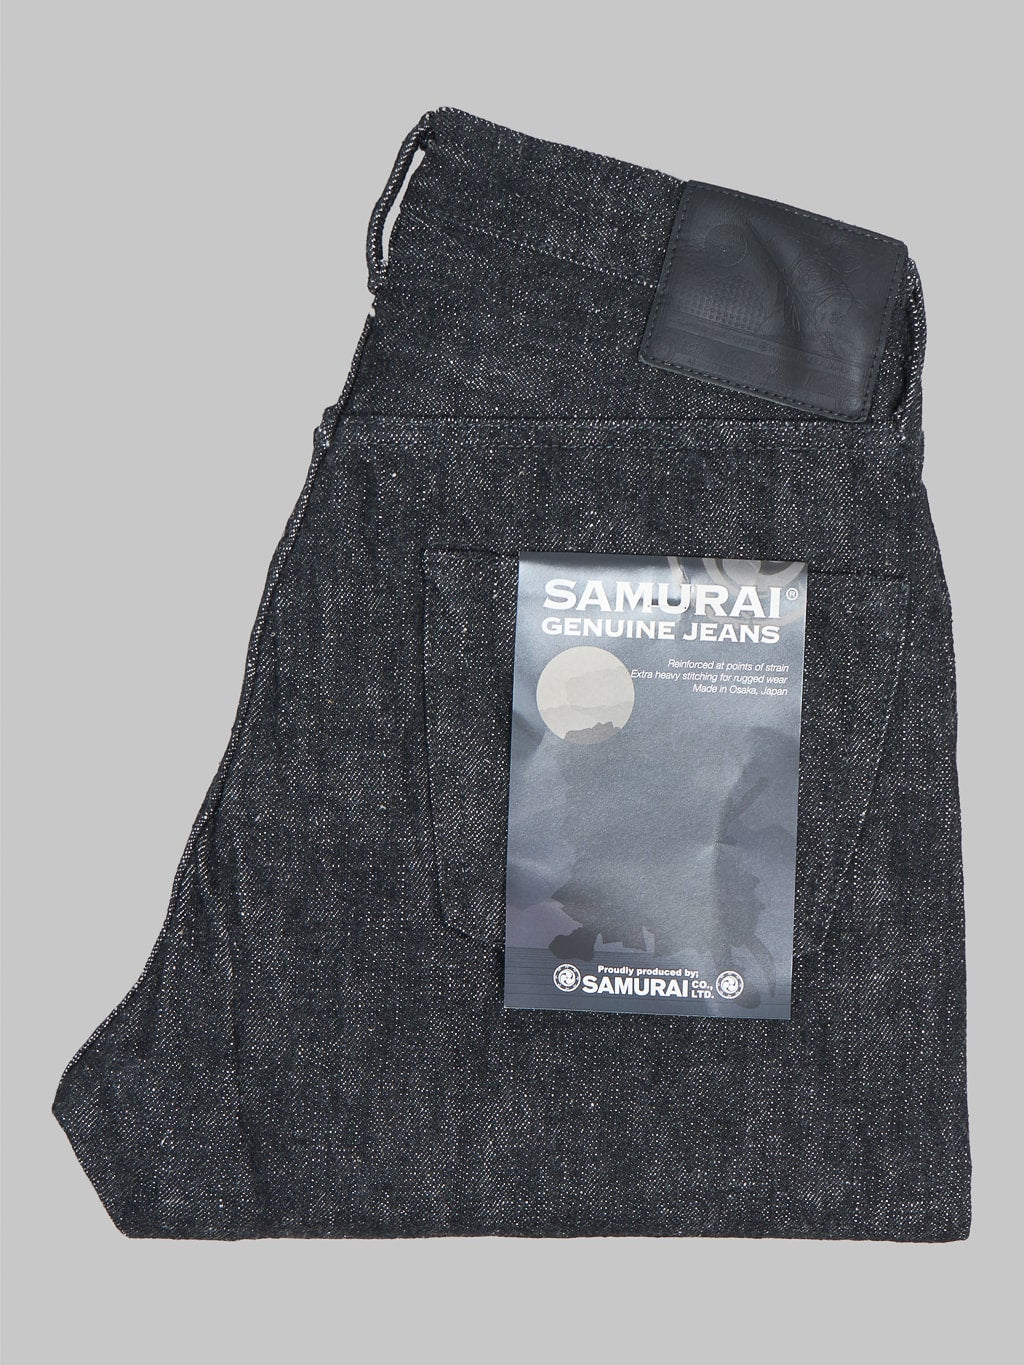 Samurai Jeans S211BK Koku Benkei 17oz Slubby Black Relaxed Tapered Jeans